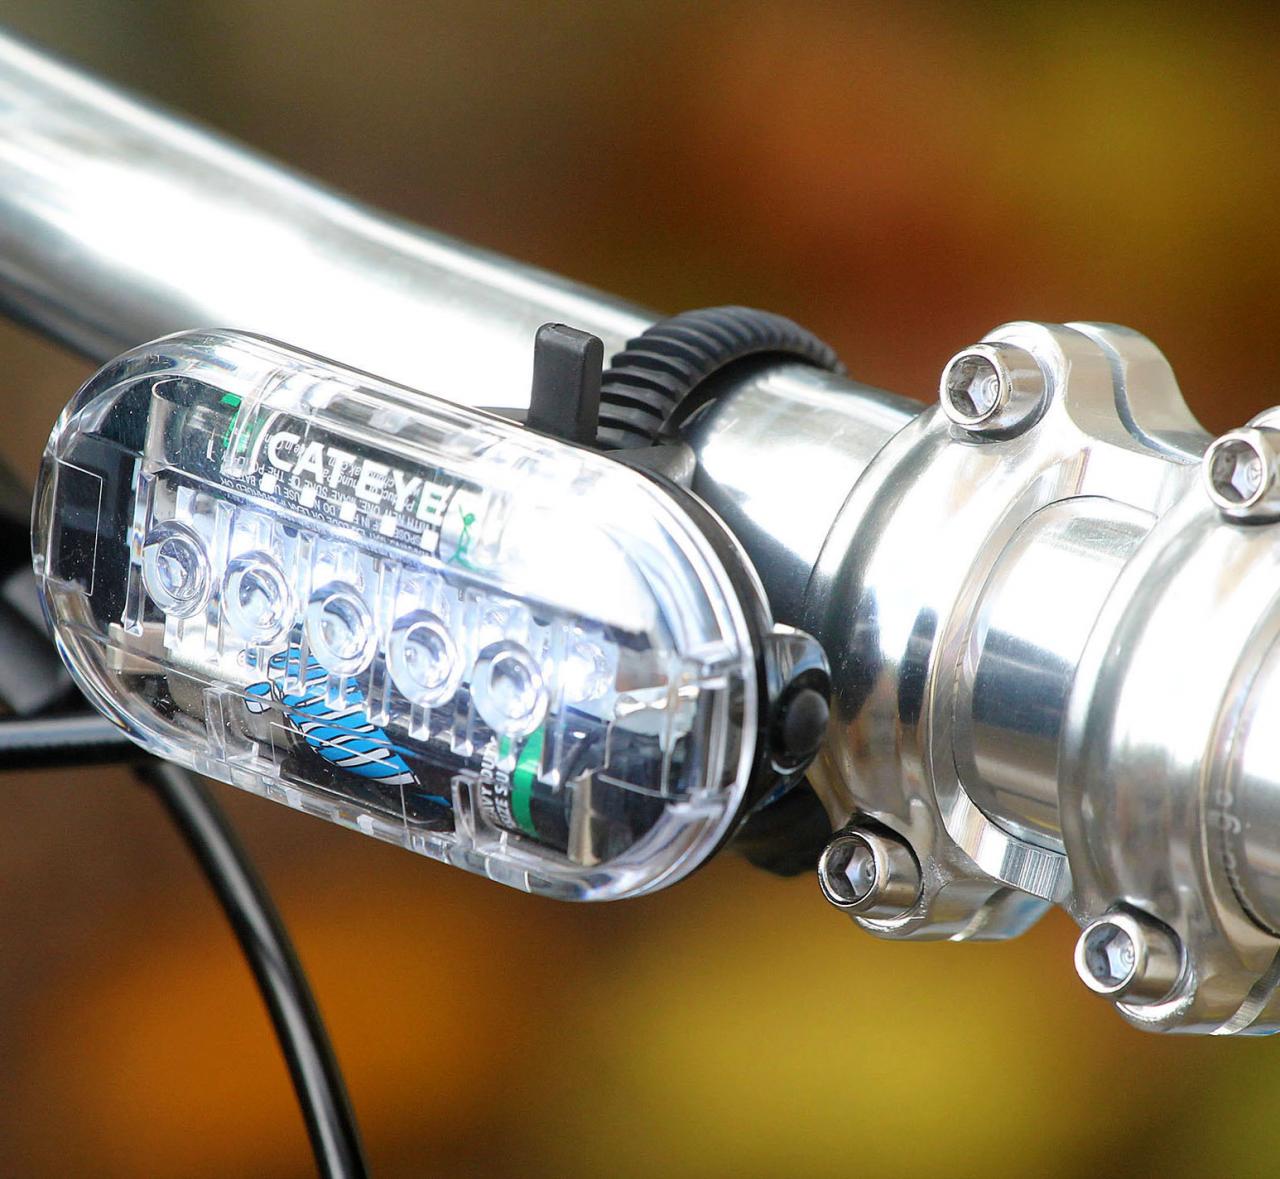 Cateye Omni 5 LED Front Bike Light HL155 Cycle Safety Headlight 